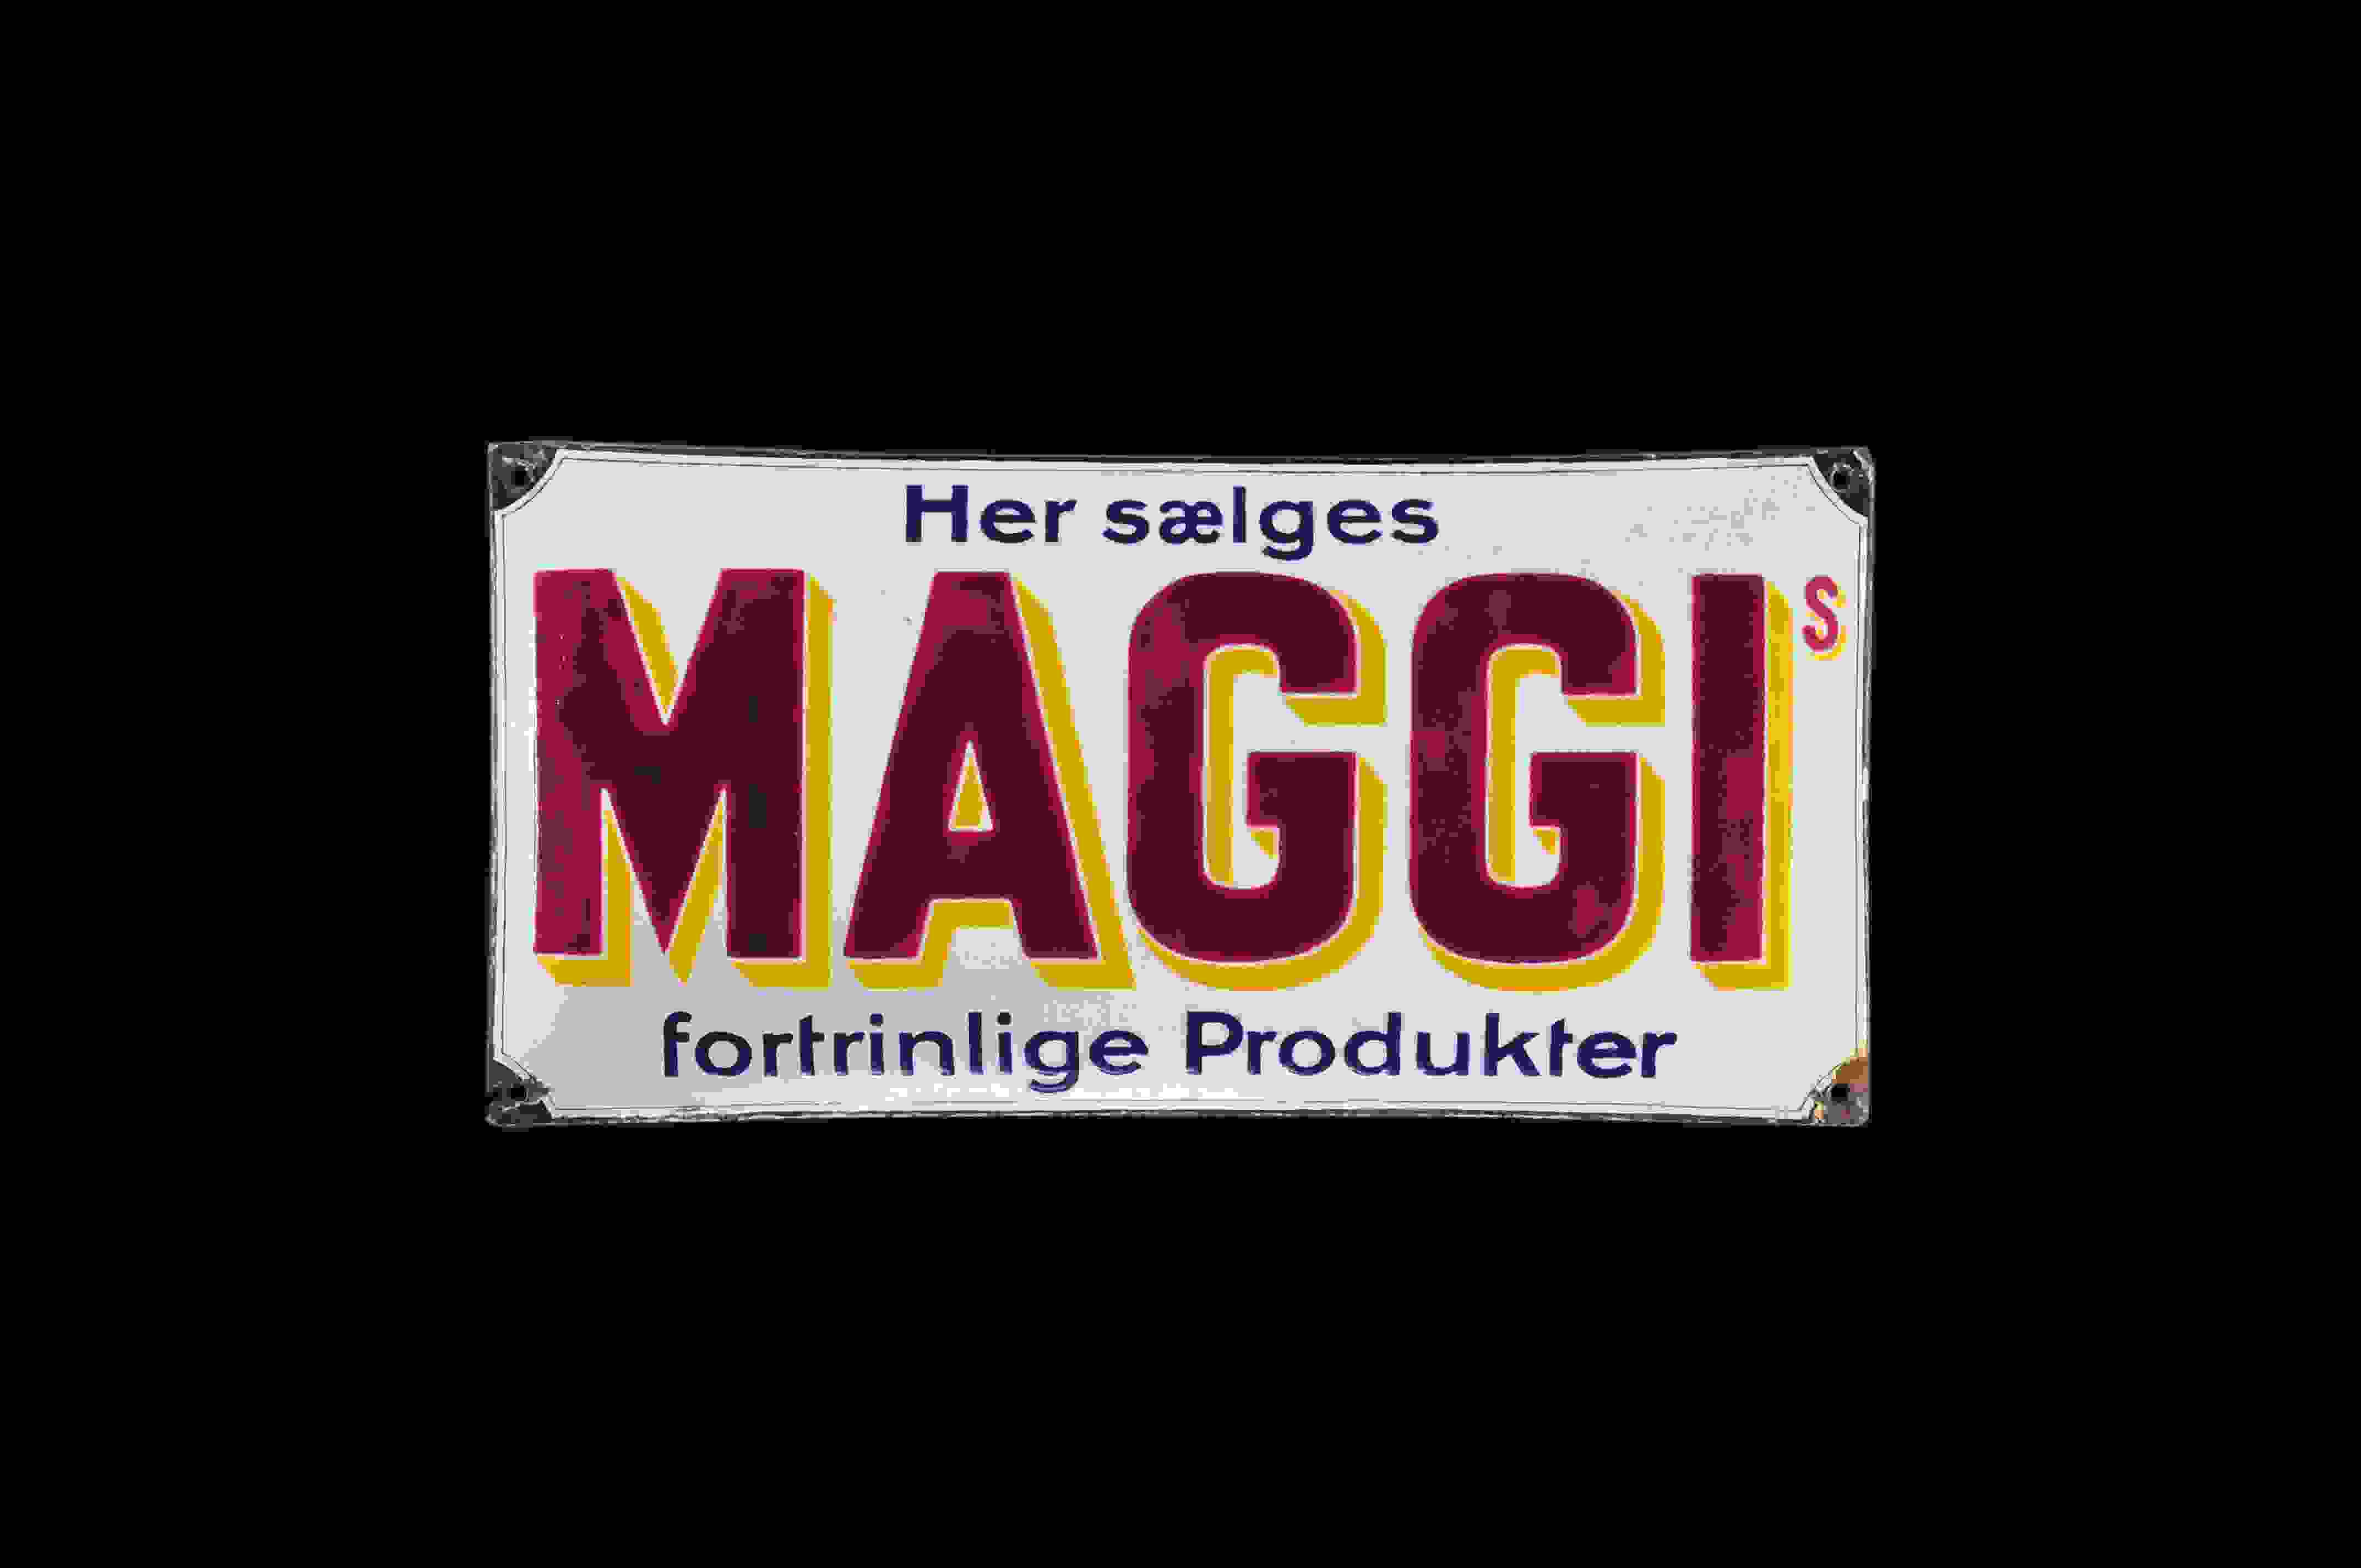 Maggi's Her saelges 